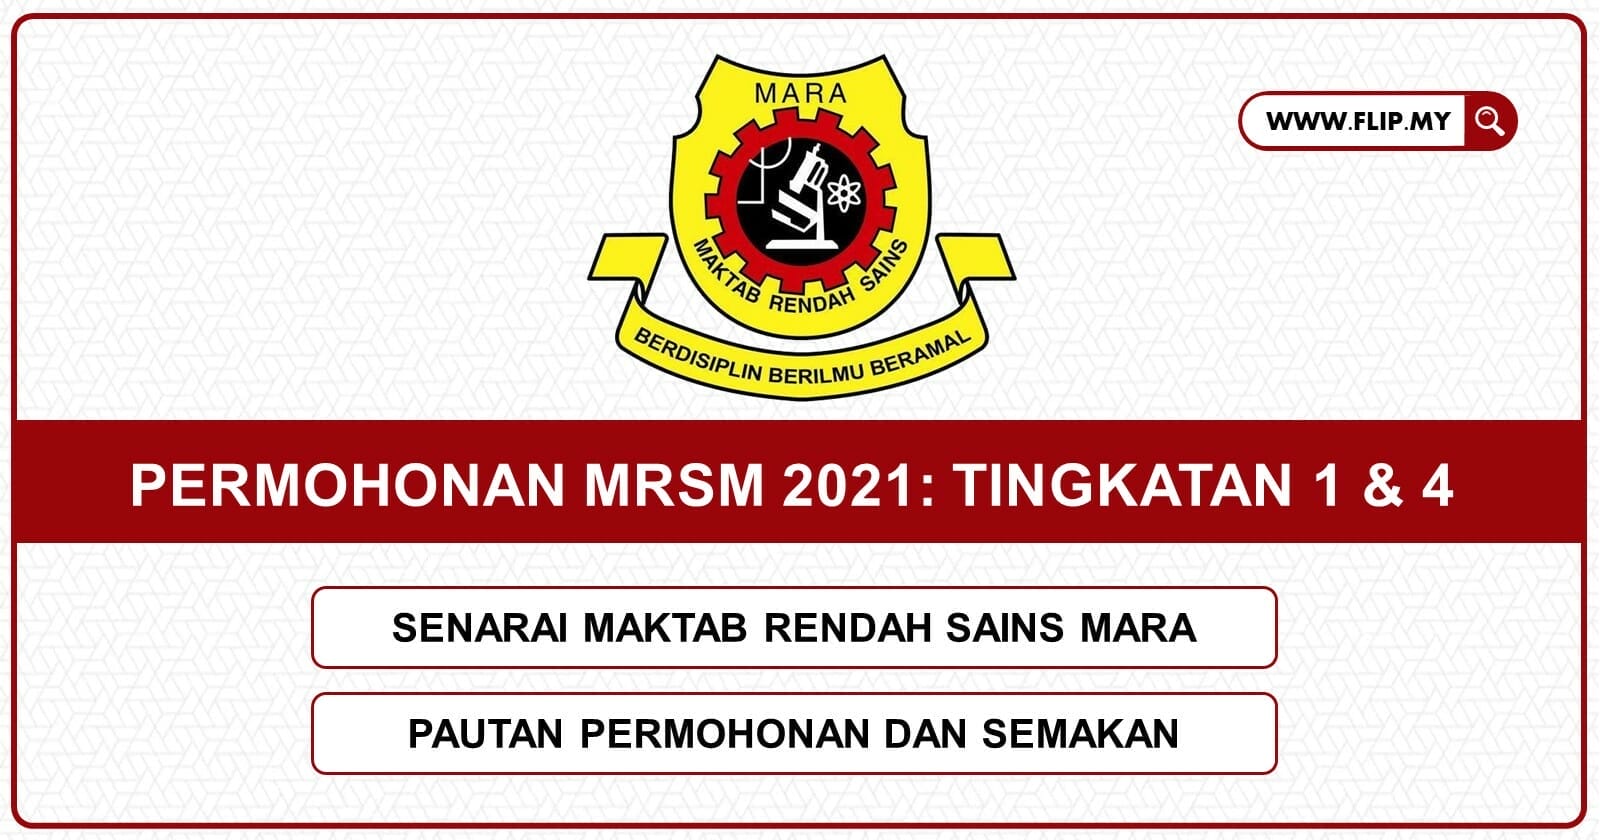 2022 pendaftaran mrsm